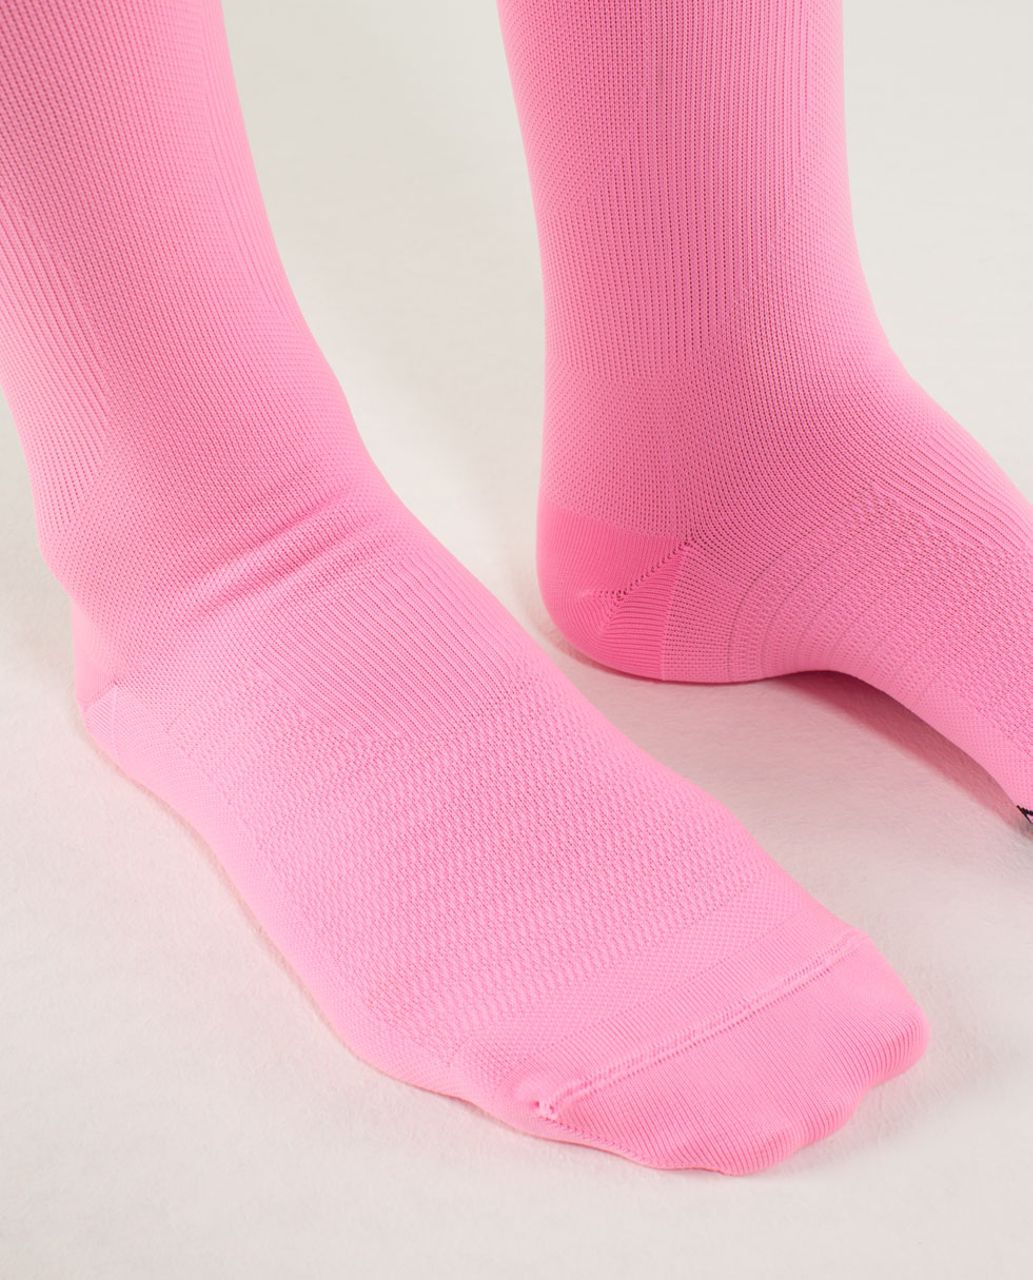 Lululemon Women's Compression Sock - Pretty Pink - lulu fanatics